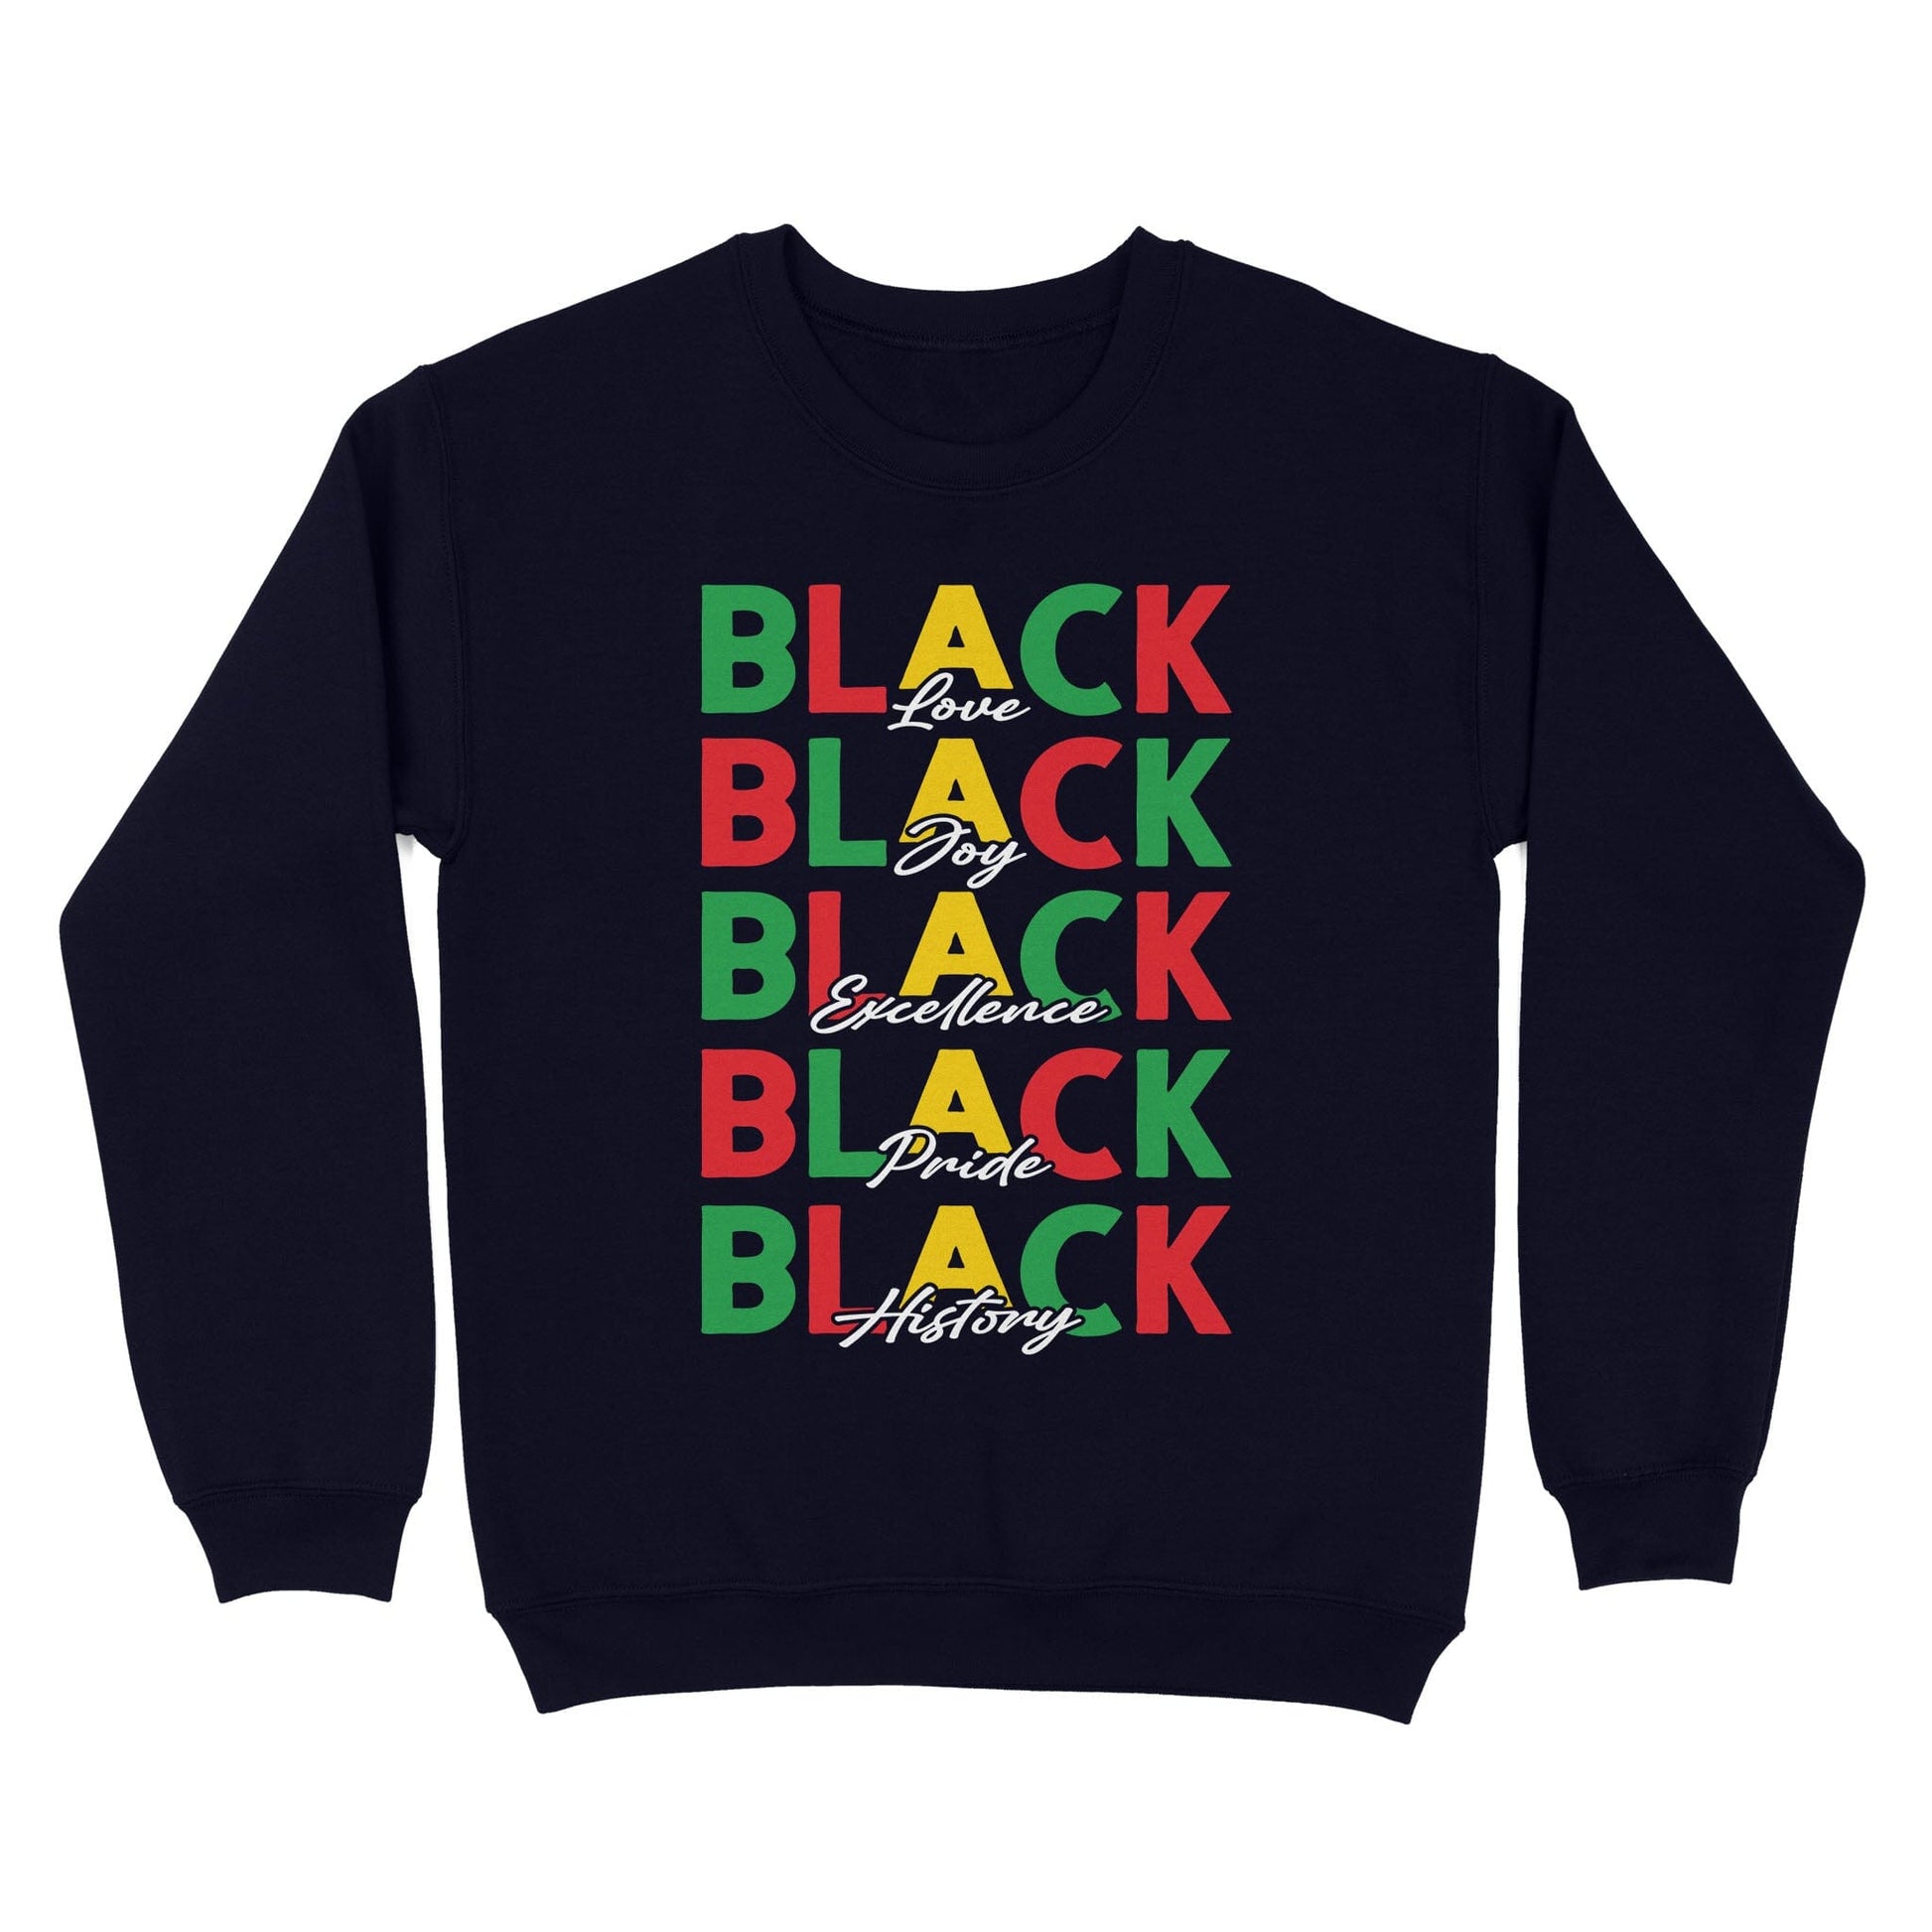 Black Love, Black Joy, Black Excellence, Black Pride, Black History Sweatshirt Apparel Gearment 